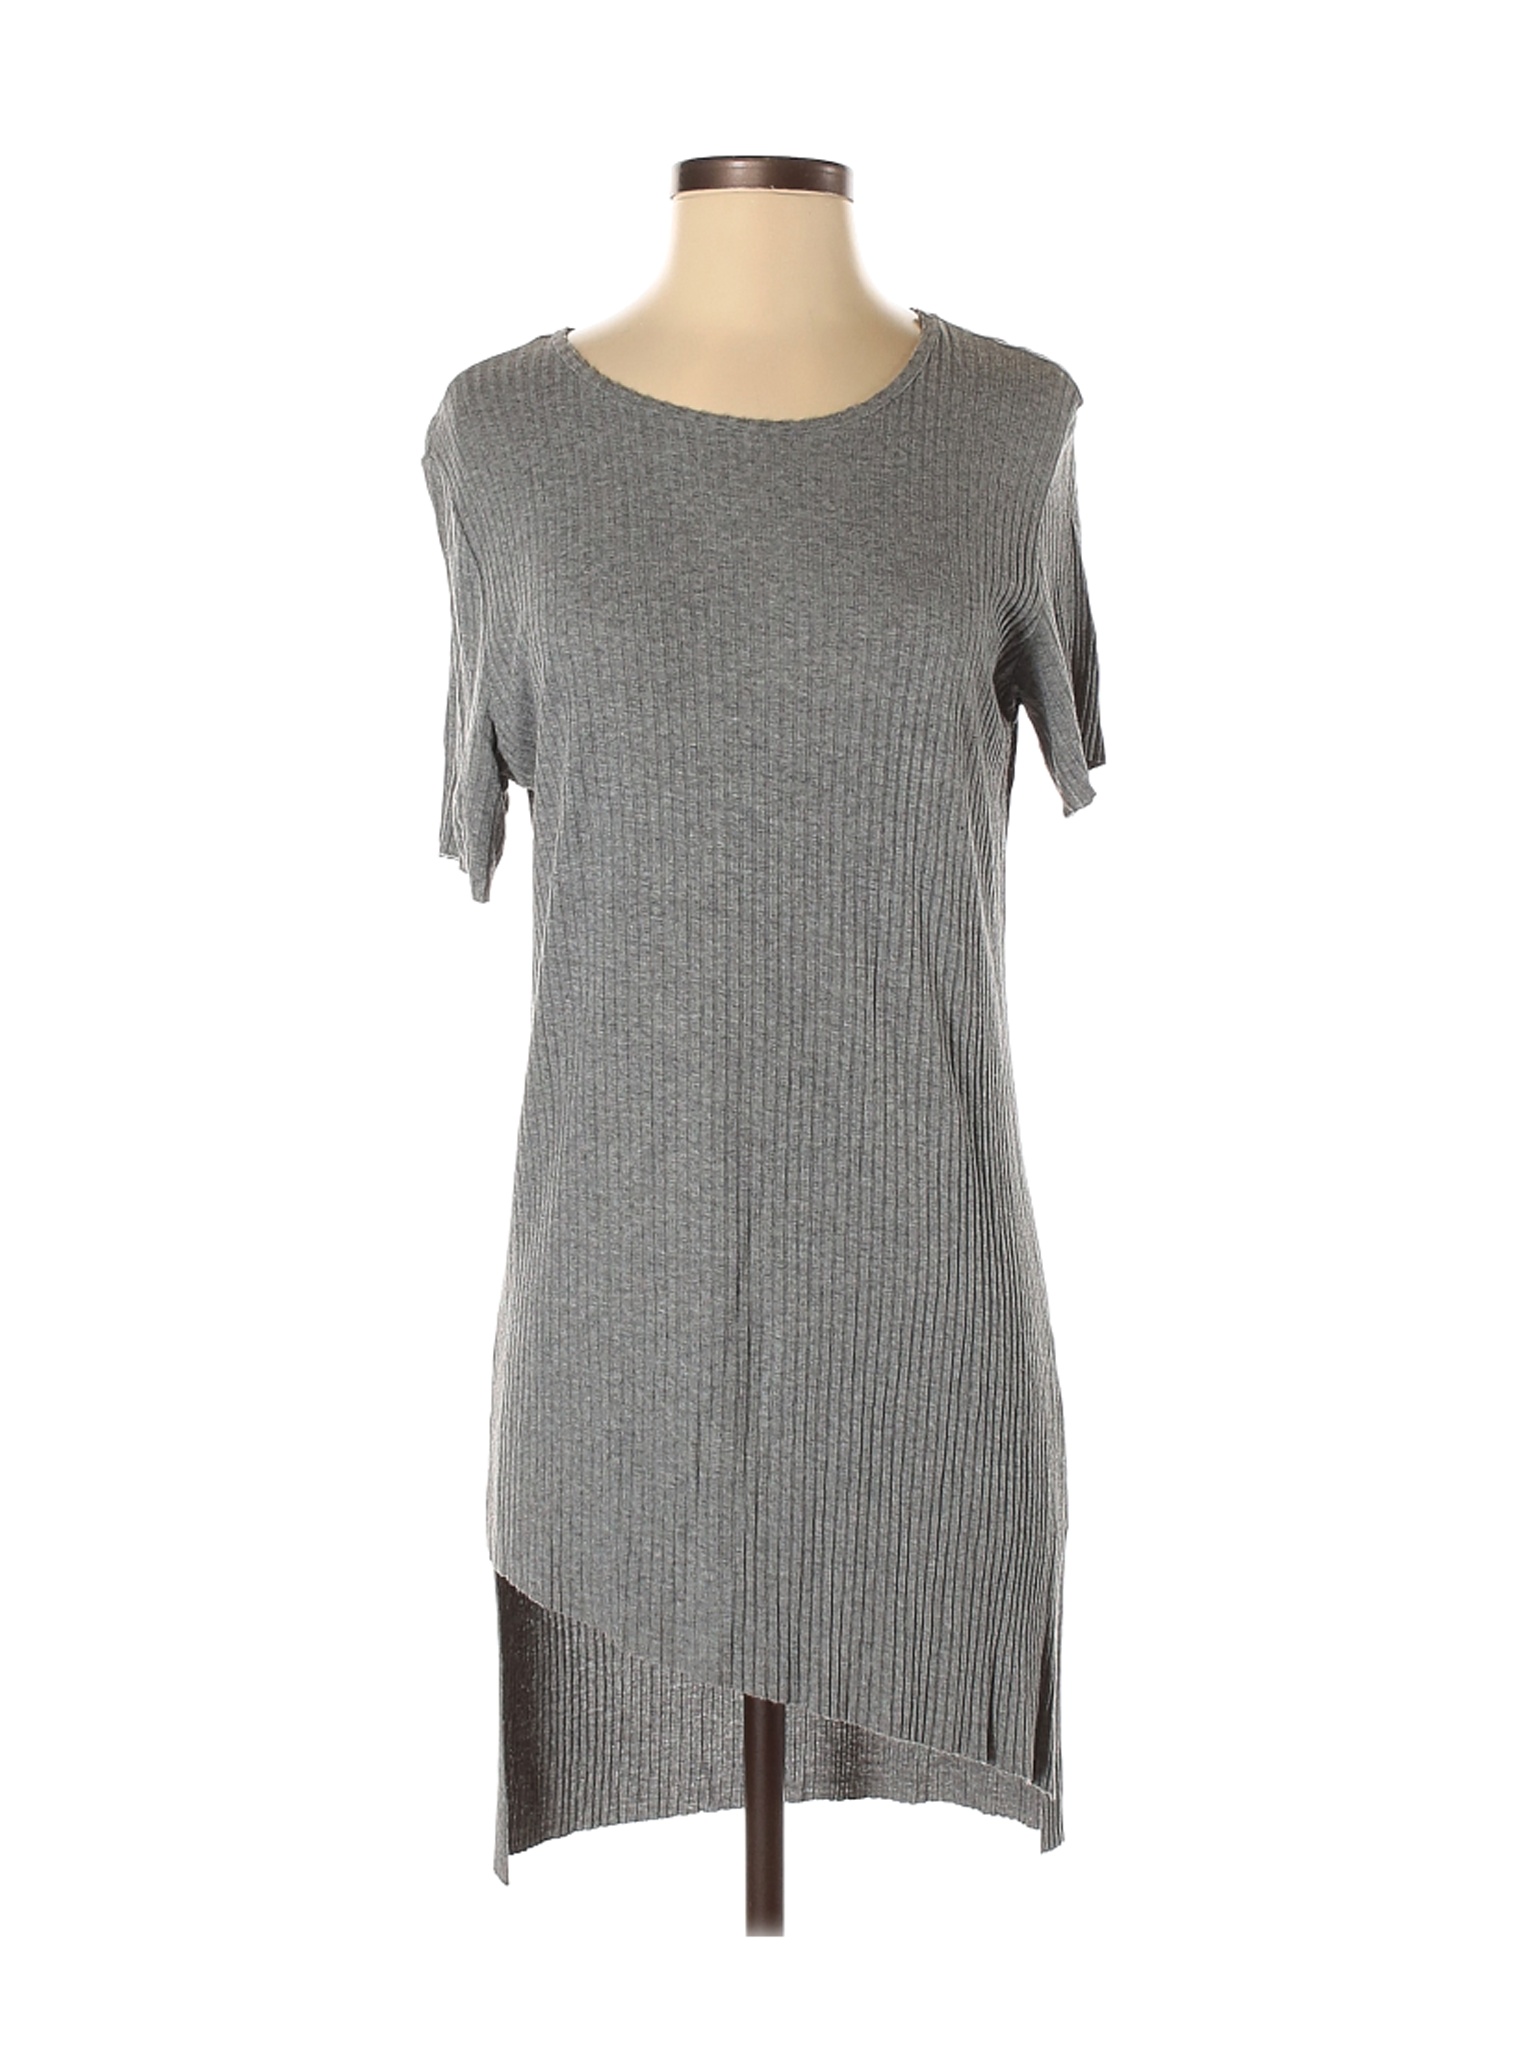 Trafaluc by Zara Women Gray Casual Dress S | eBay